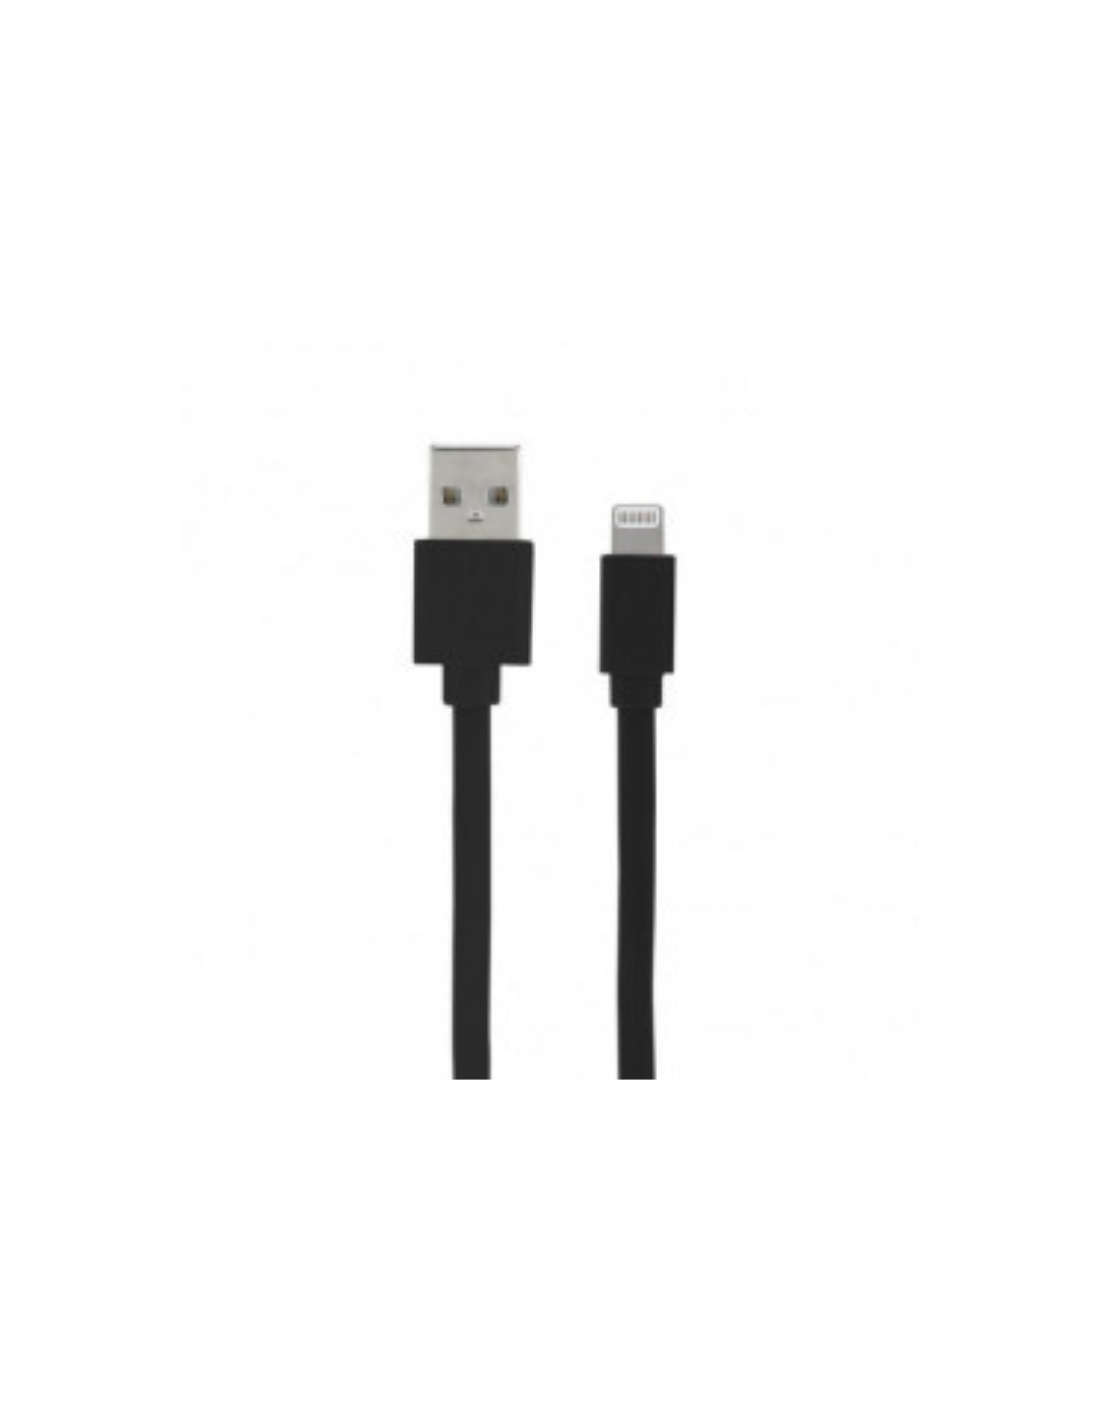 Cavo USB iOS Lightning per trasferire dati e ricaricare iPhone e IPad  Telecustodia 601-03, Lungo